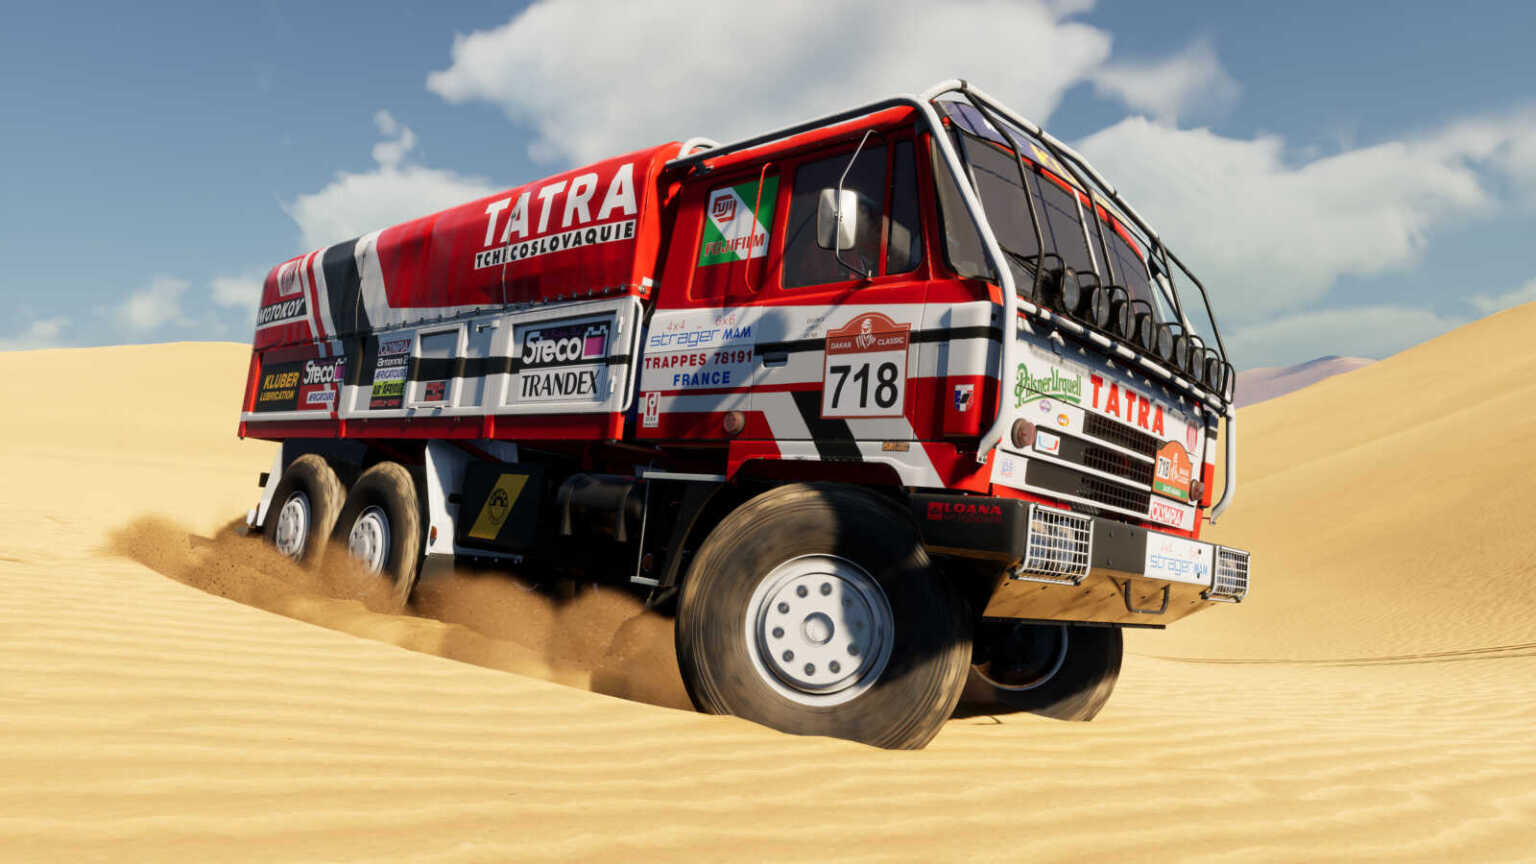 dakar desert rally Tatra2